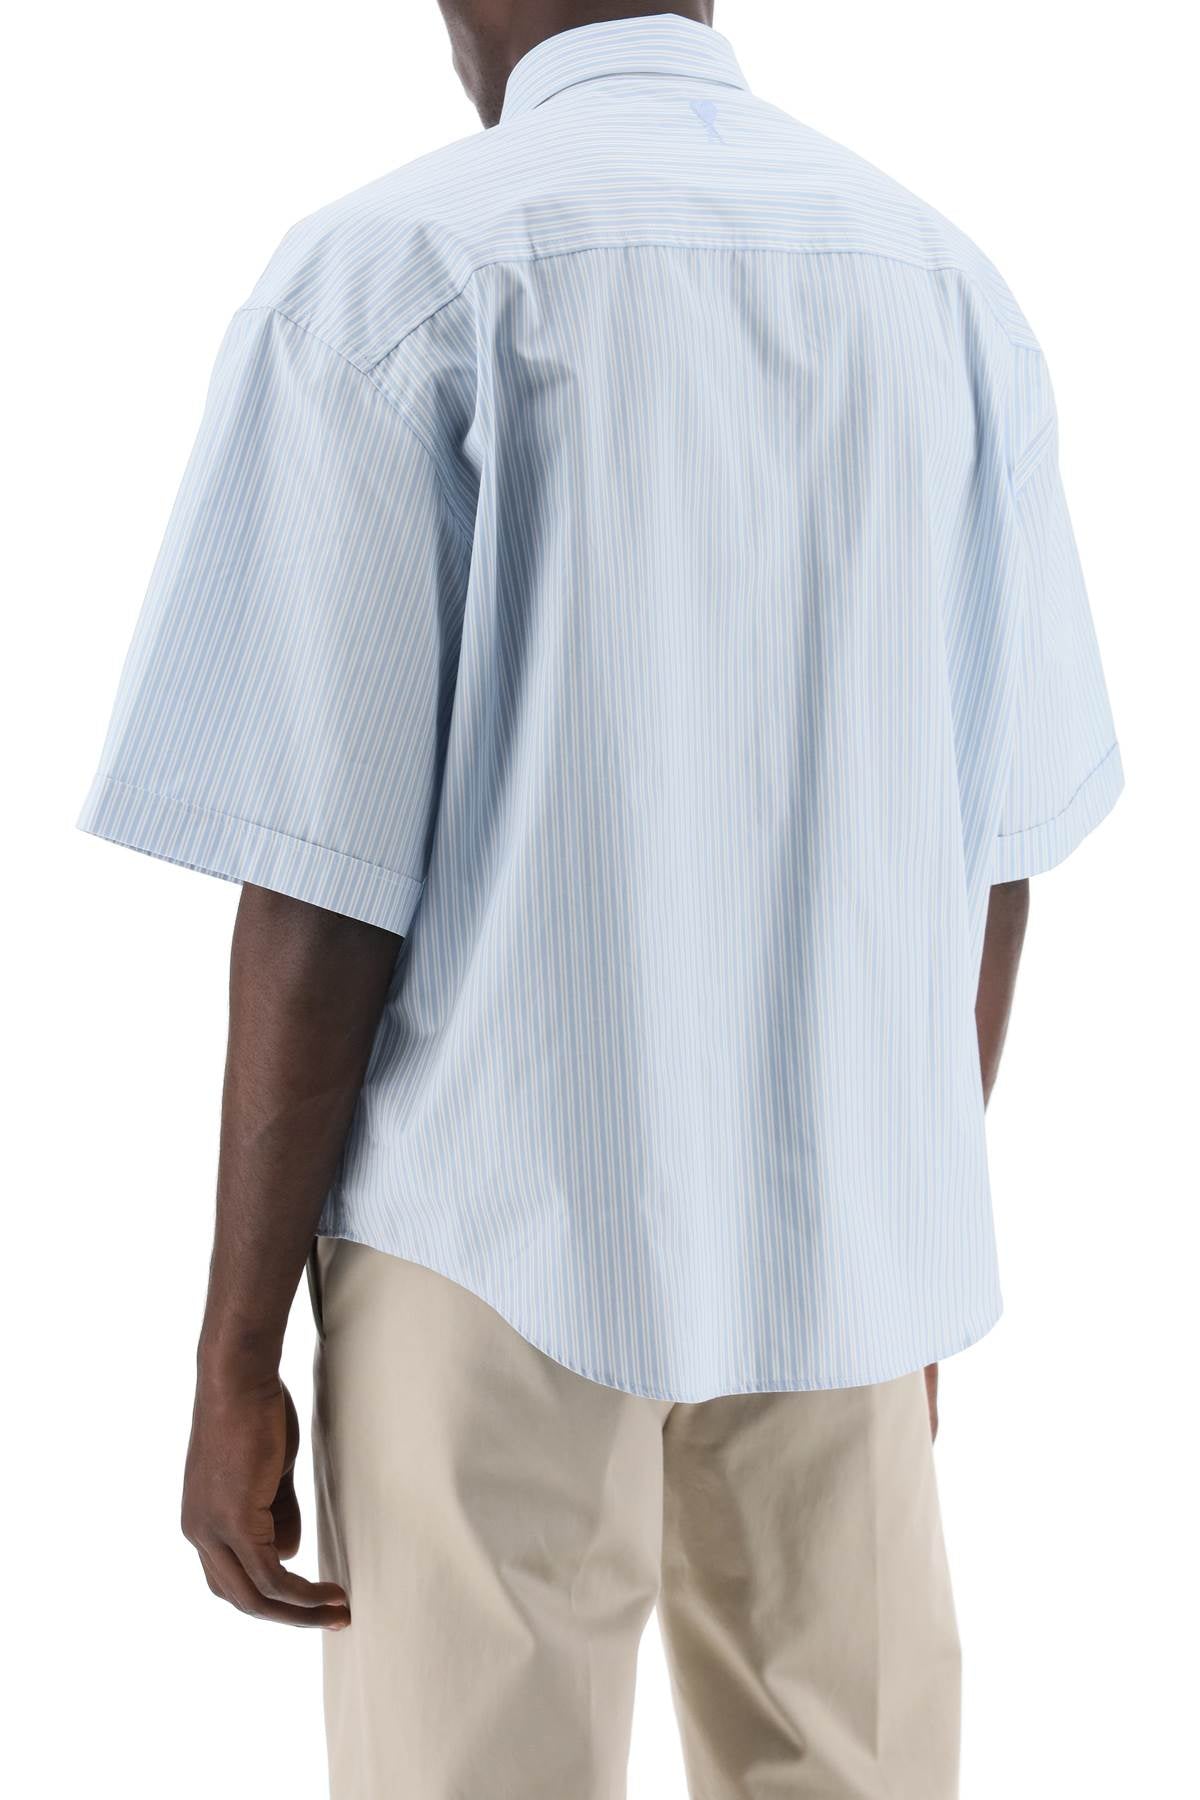 Ami paris short-sleeved striped shirt-2